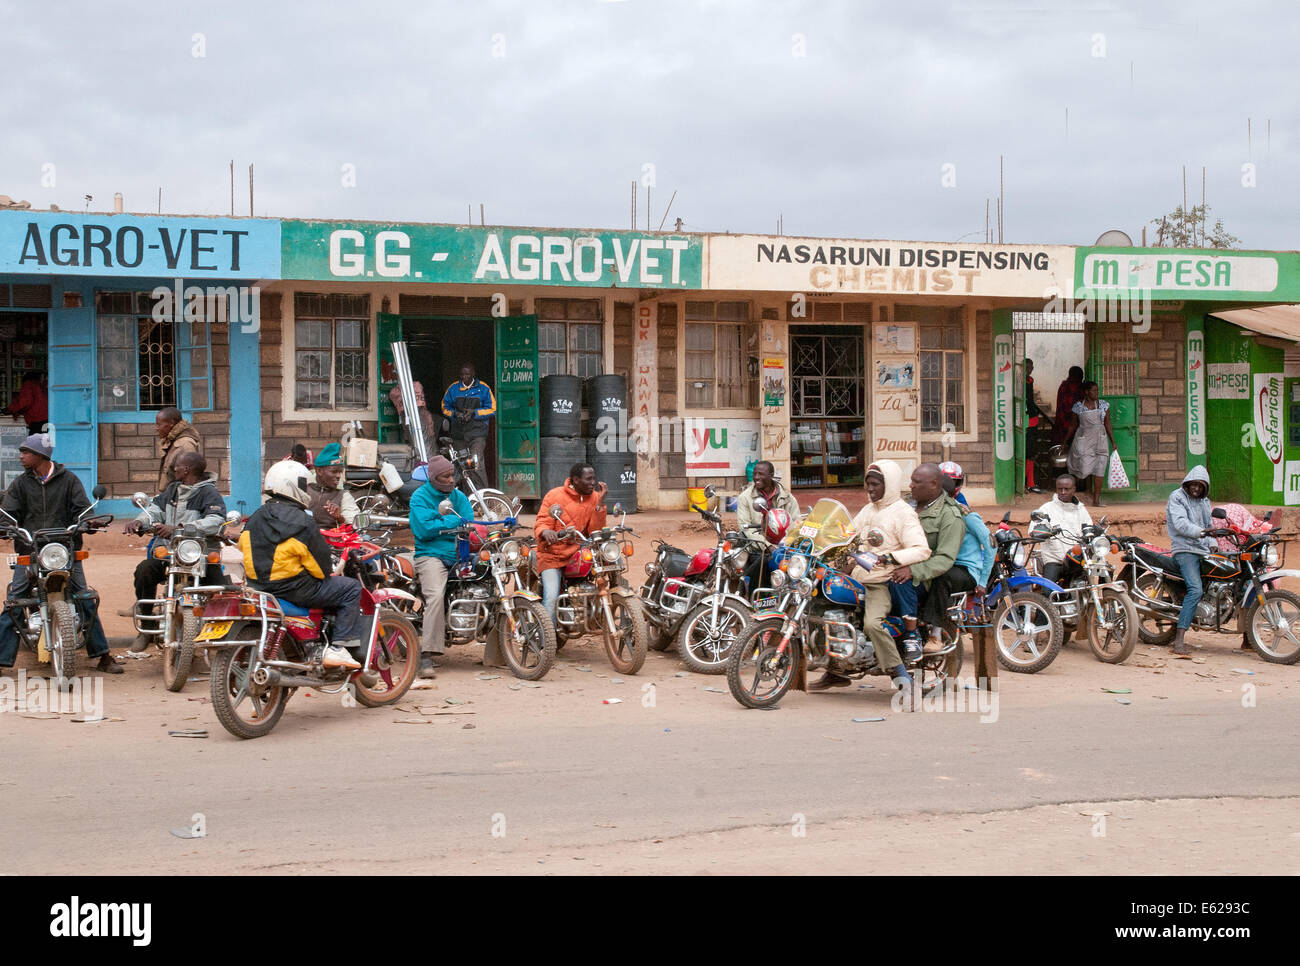 Motor cycle taxis outside corrugated iron shacks and roadside shops duka hotel at Kaijado on Namanga Nairobi road Kenya Africa Stock Photo